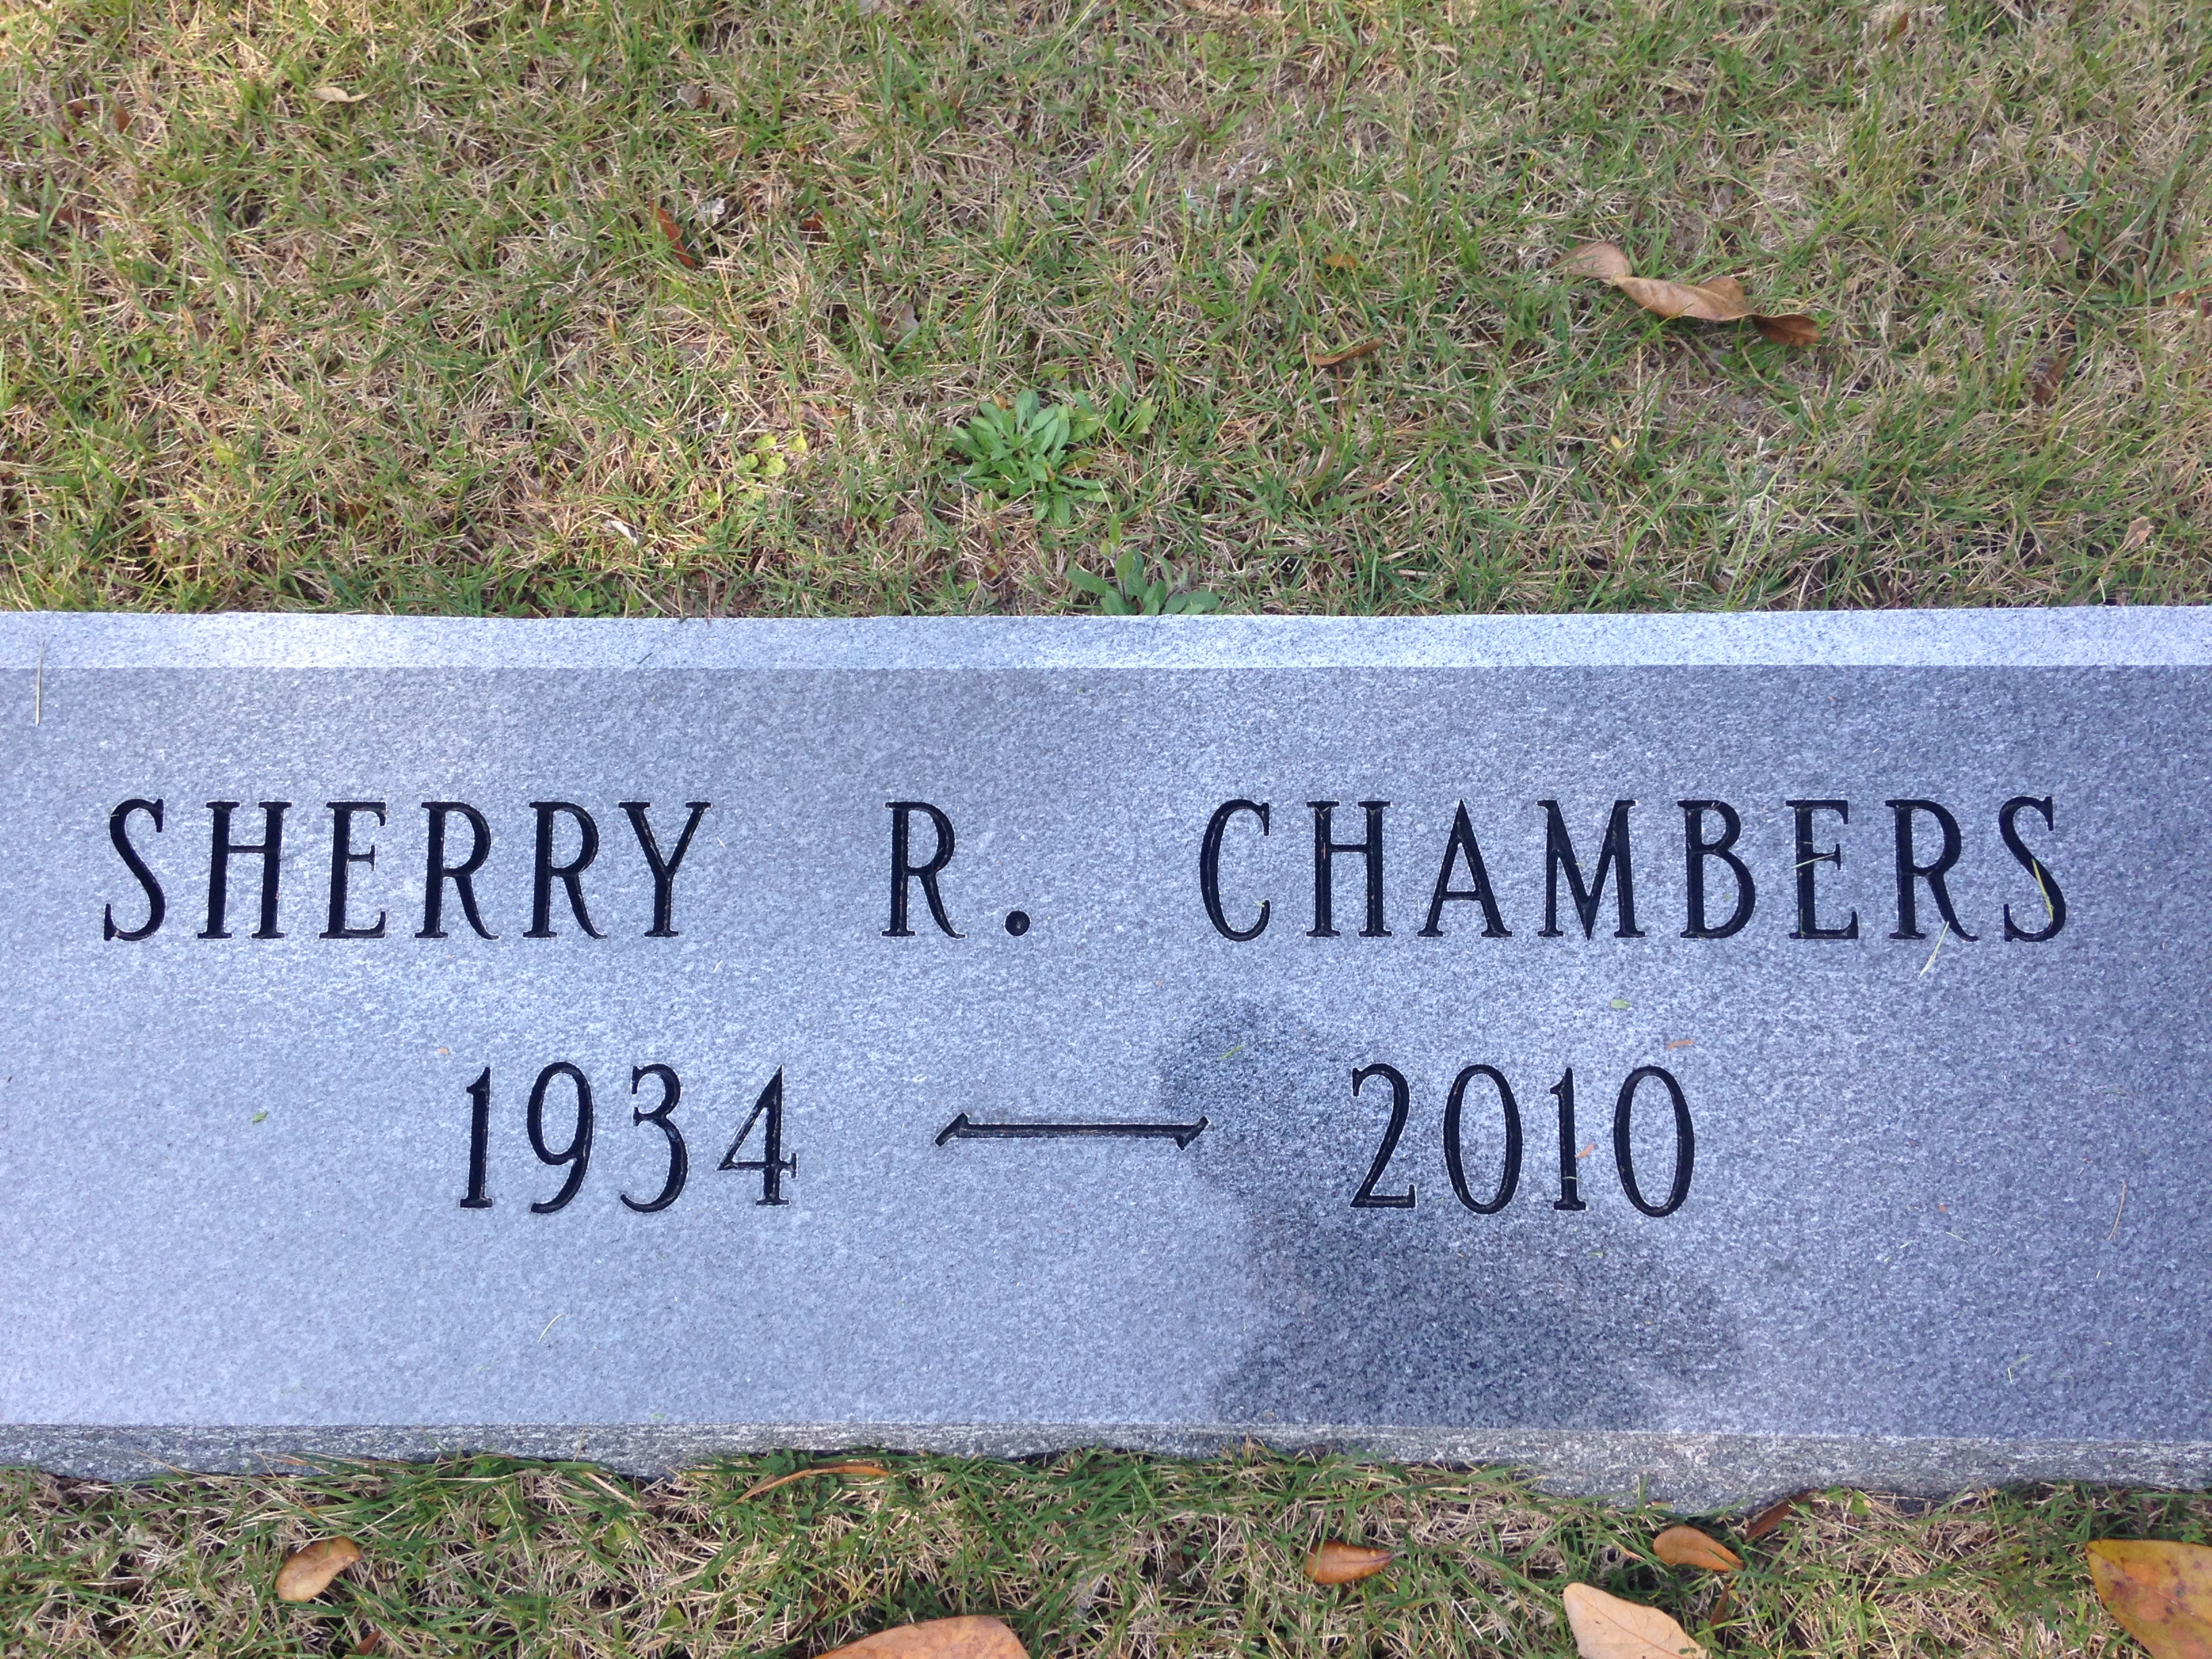 Sherry R. Chambers